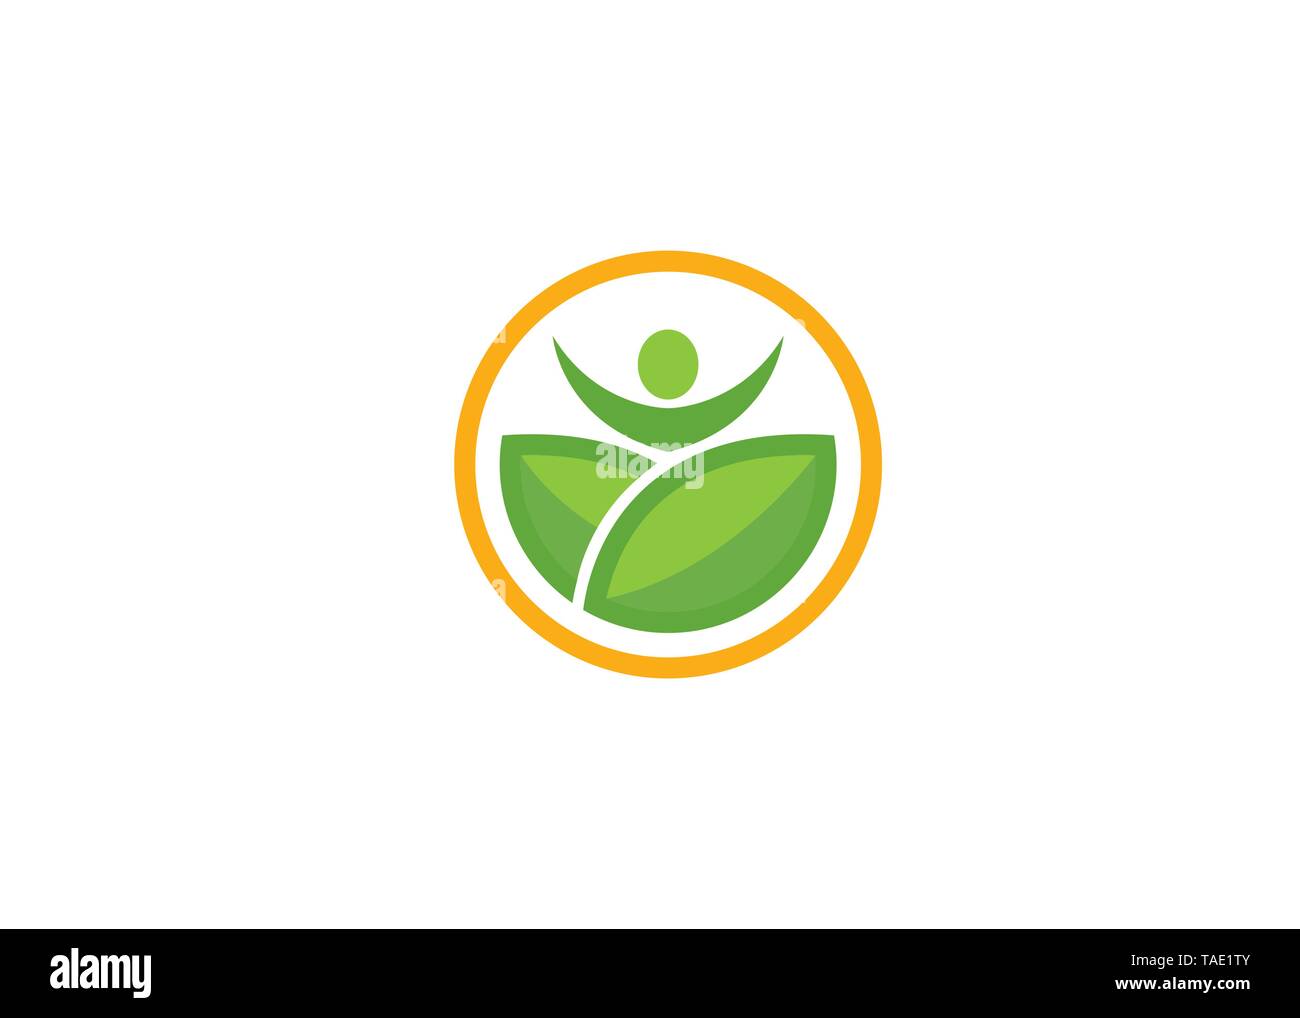 Creative Body Leaf Vector Logo Design Illustration Stock Vector